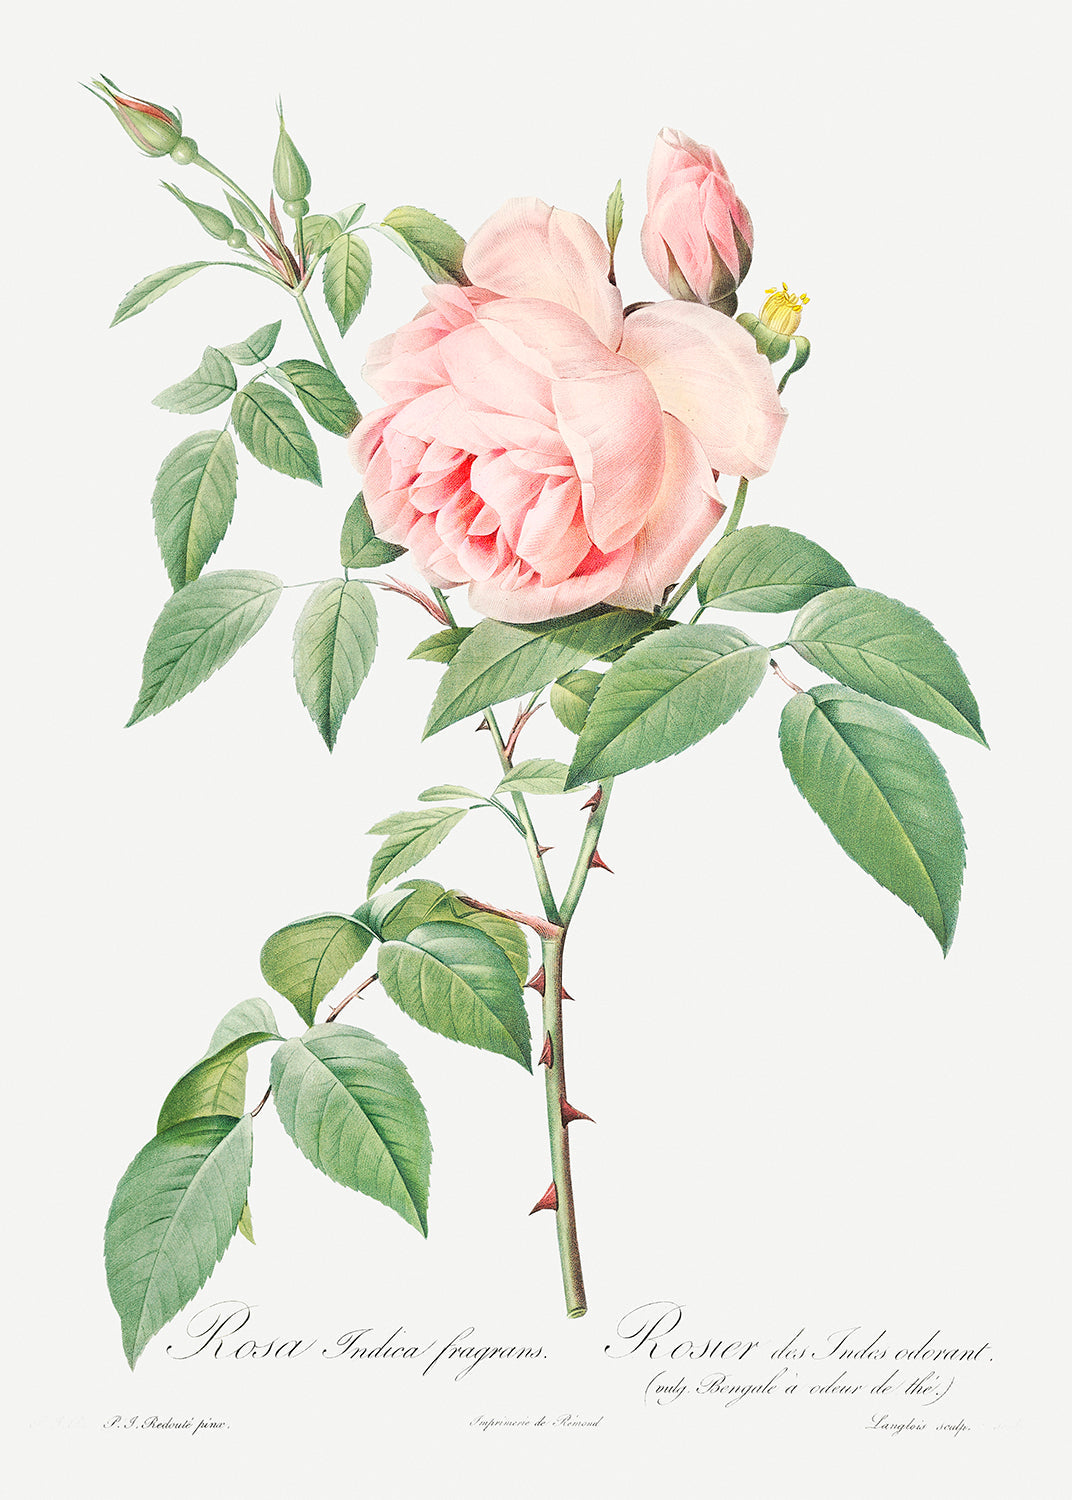 Botanical Plant Print - Rosa indica fragrans (Fragrant Rosebush) by Pierre Joseph Redoute